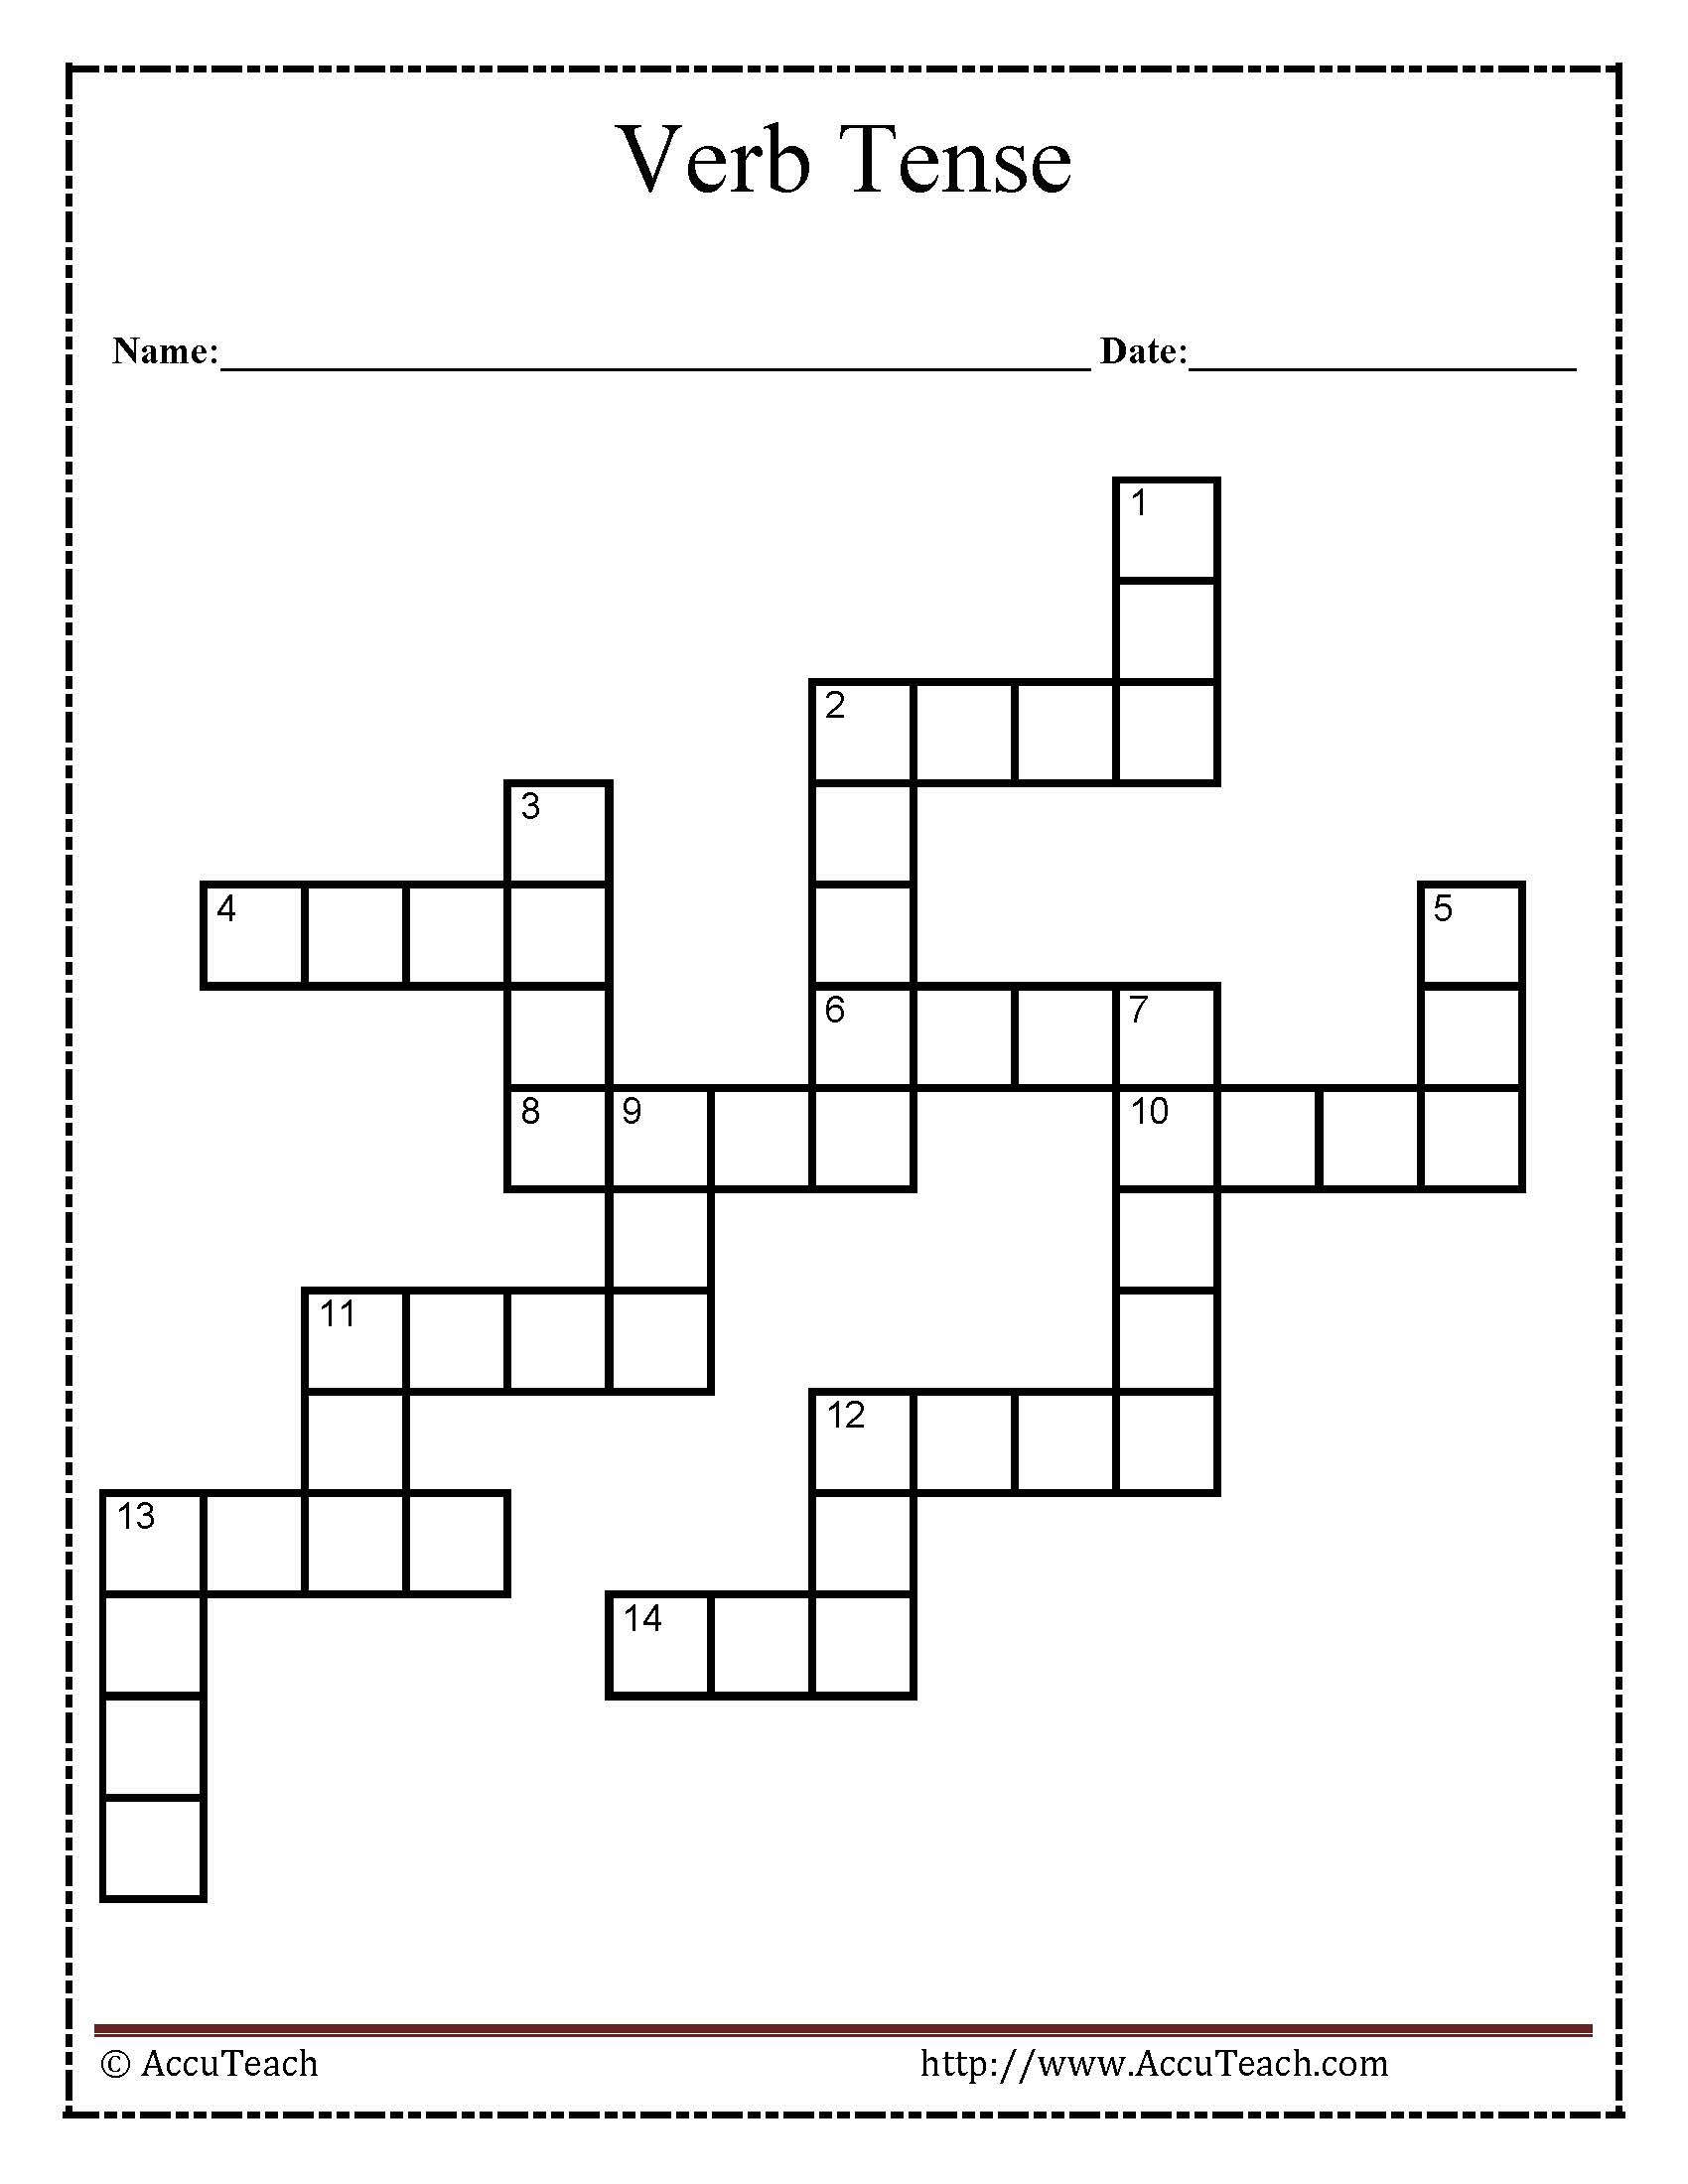 Verb Tense Crossword Puzzle Worksheet - Printable Crossword Puzzles Grade 5